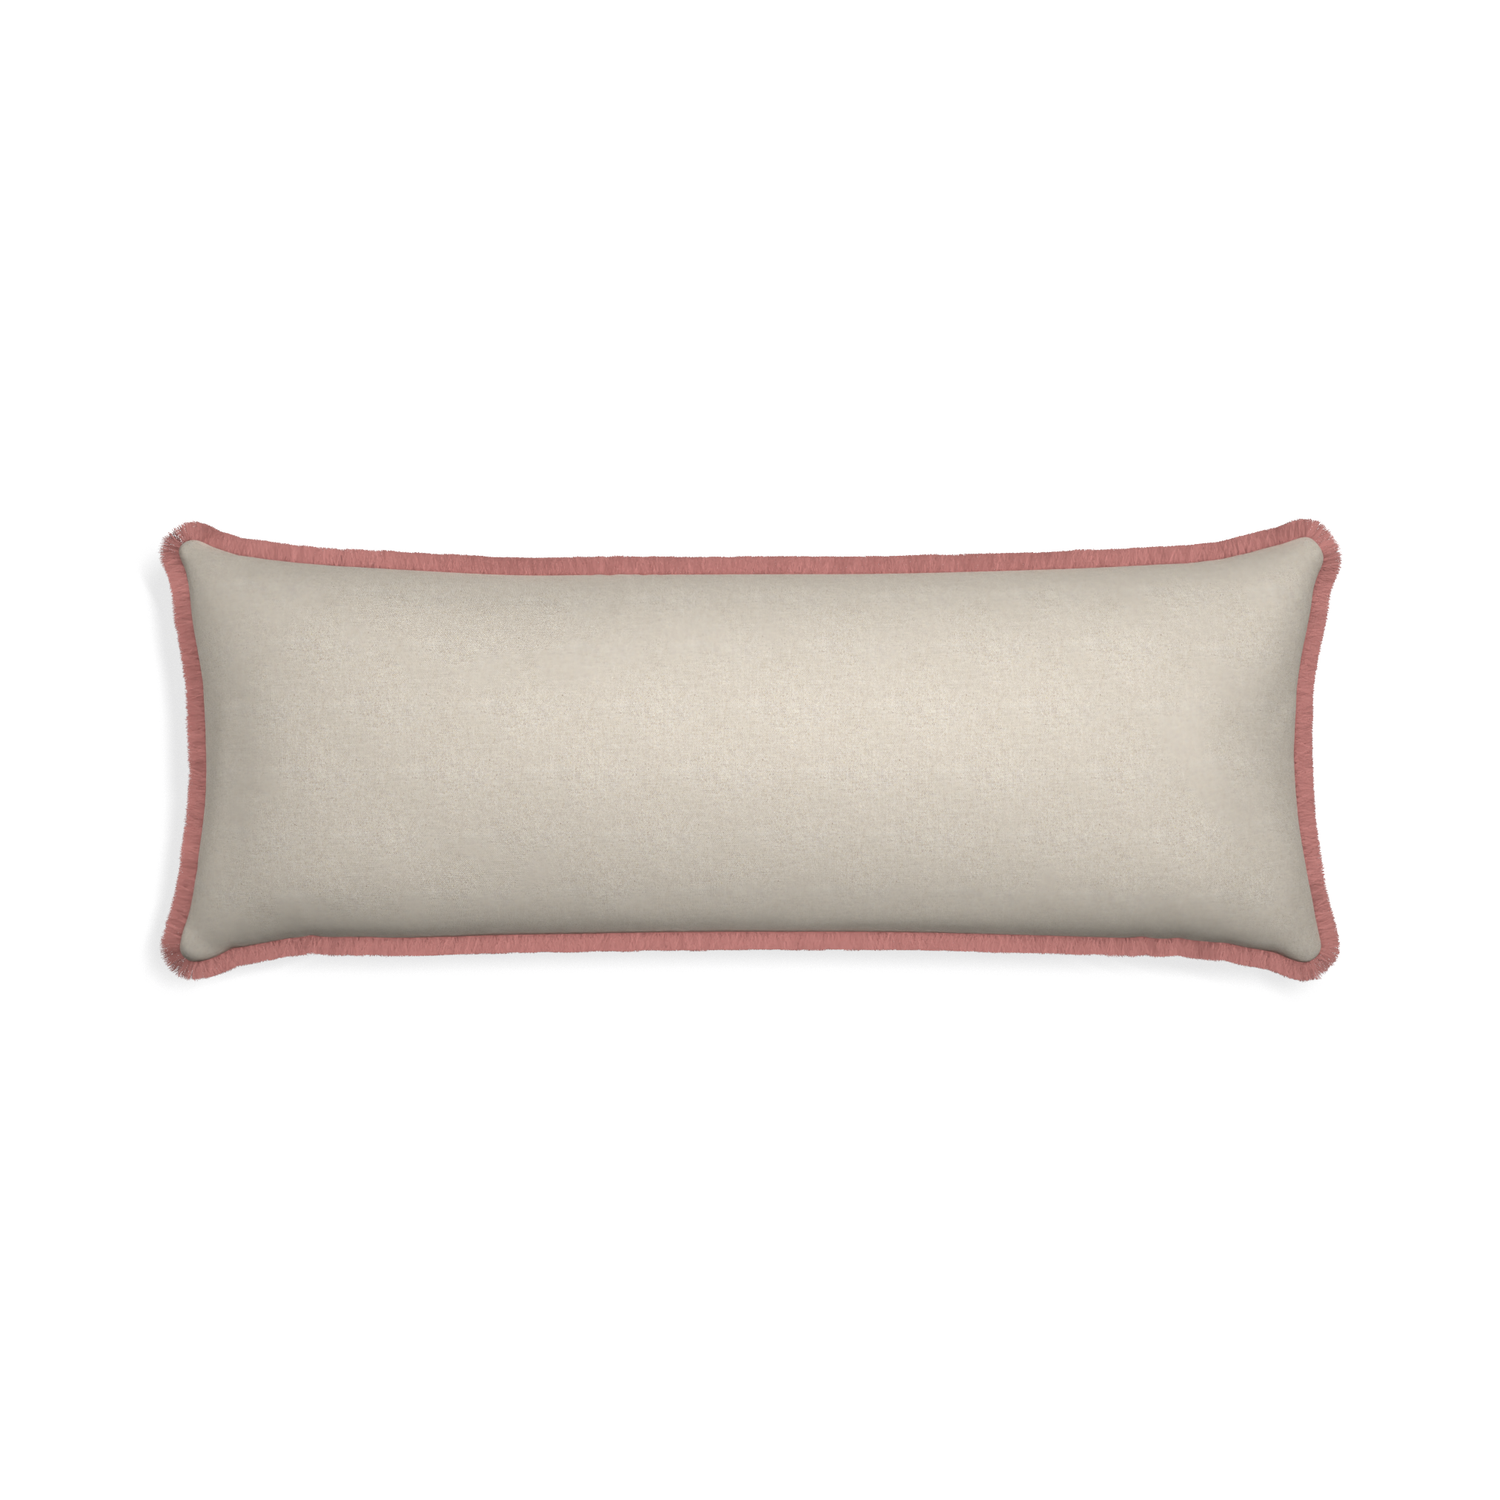 Xl-lumbar oat custom pillow with d fringe on white background